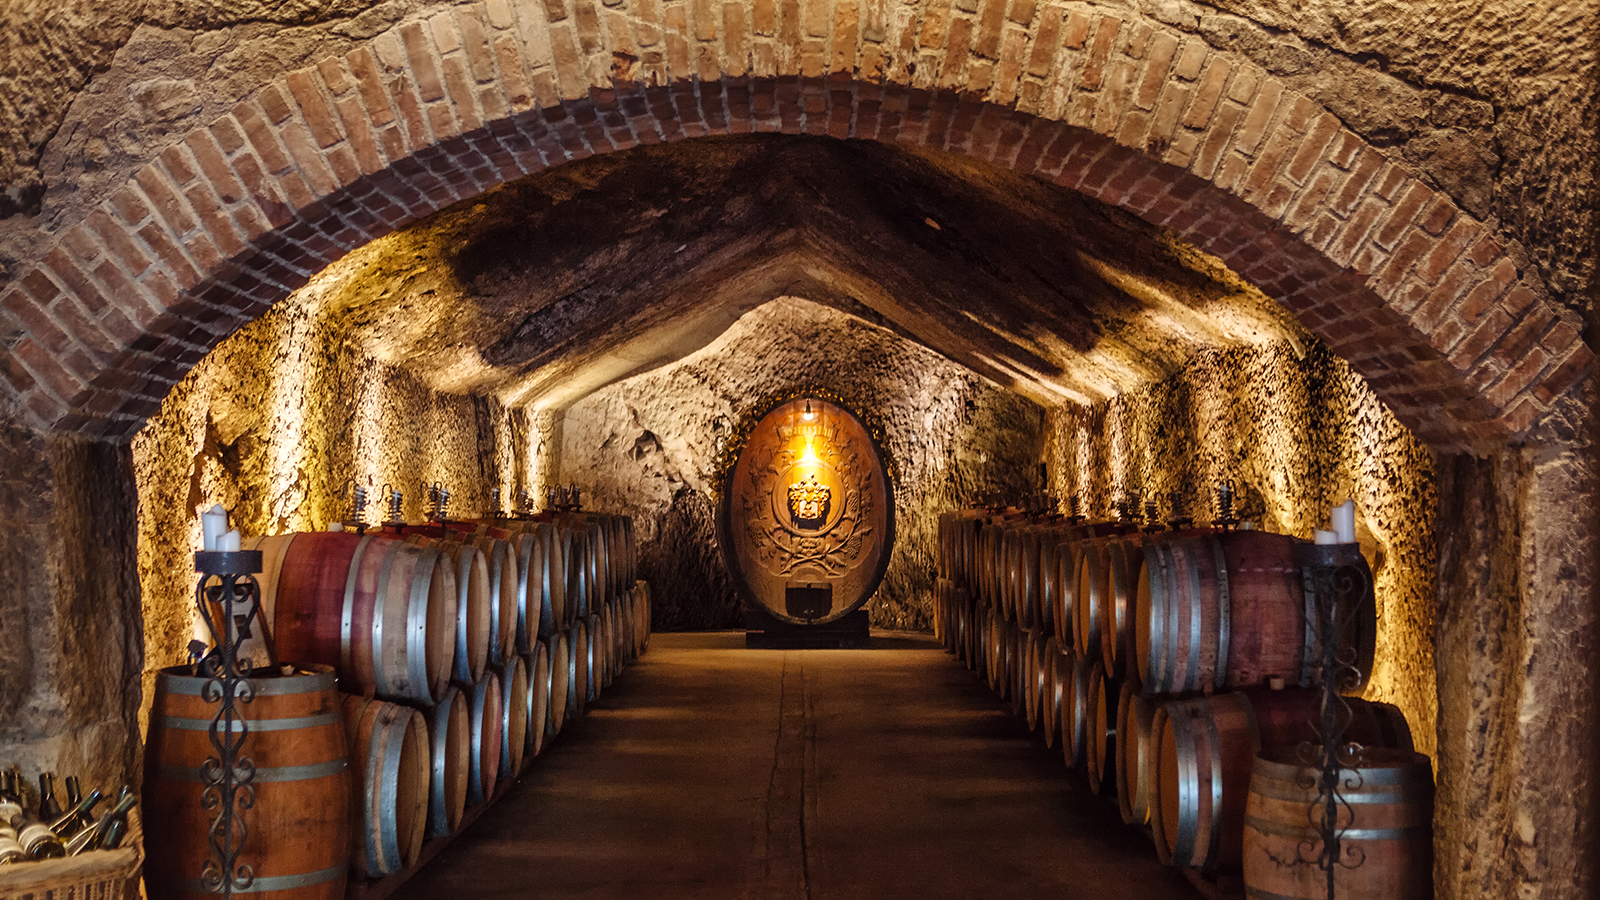 Wine cellar with barrels of wine. 